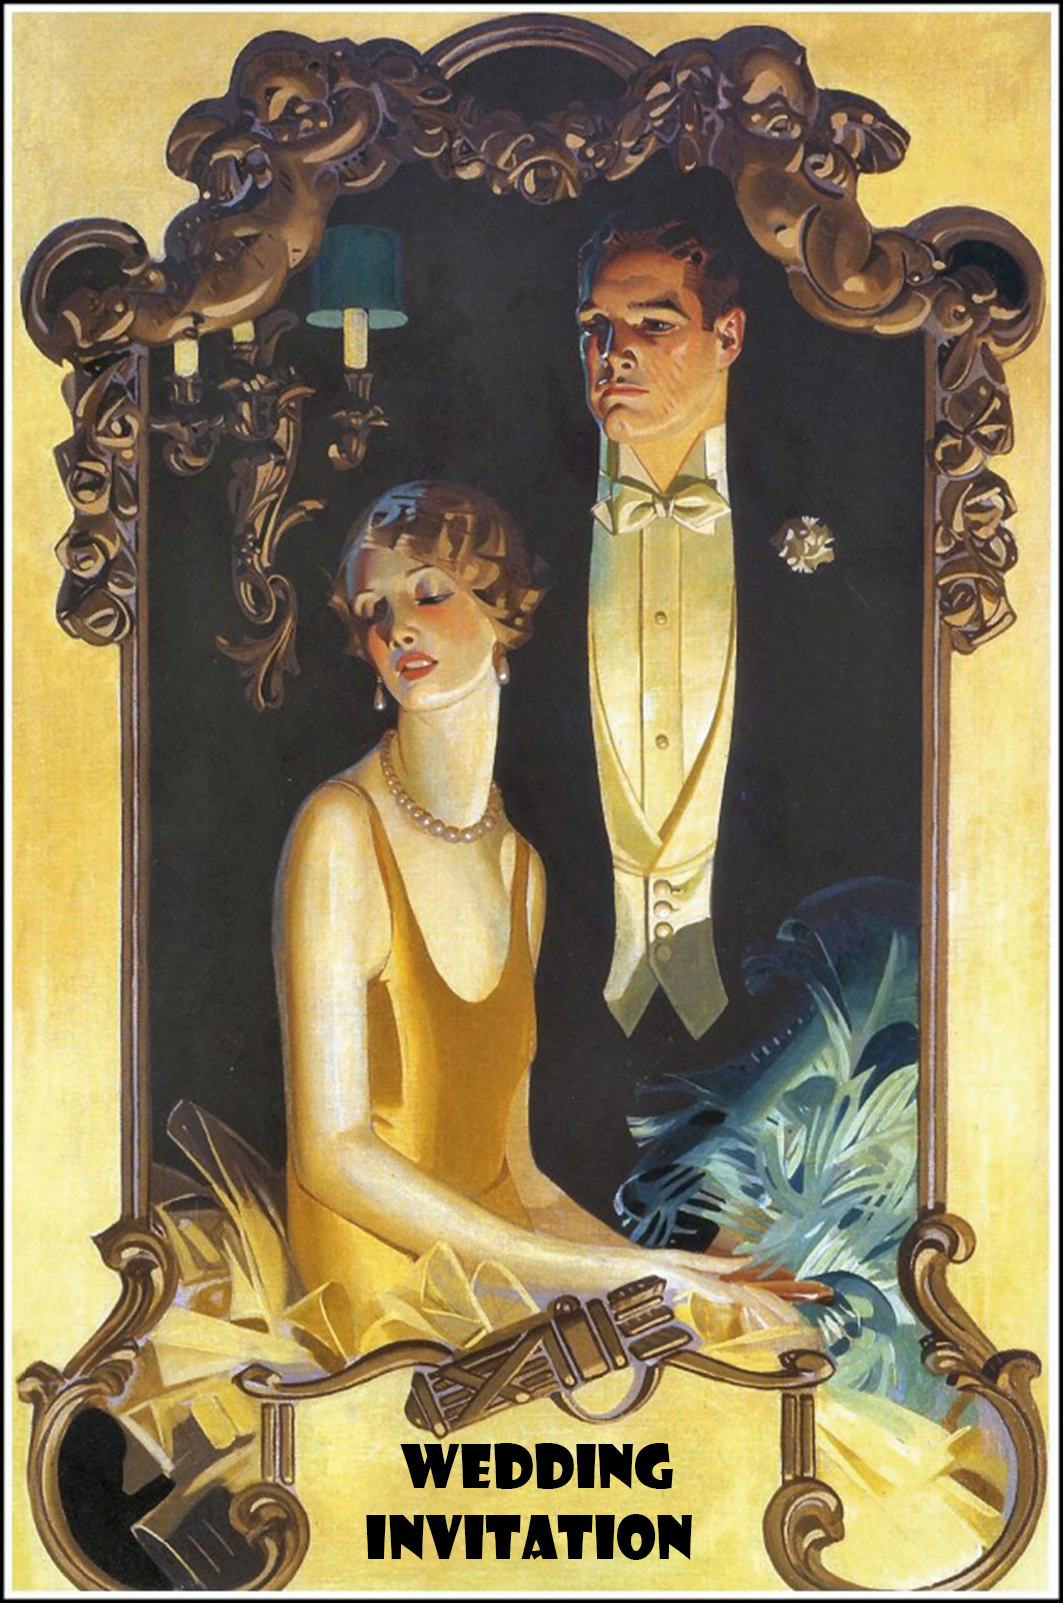 Wedding invitatin in art nouveau style